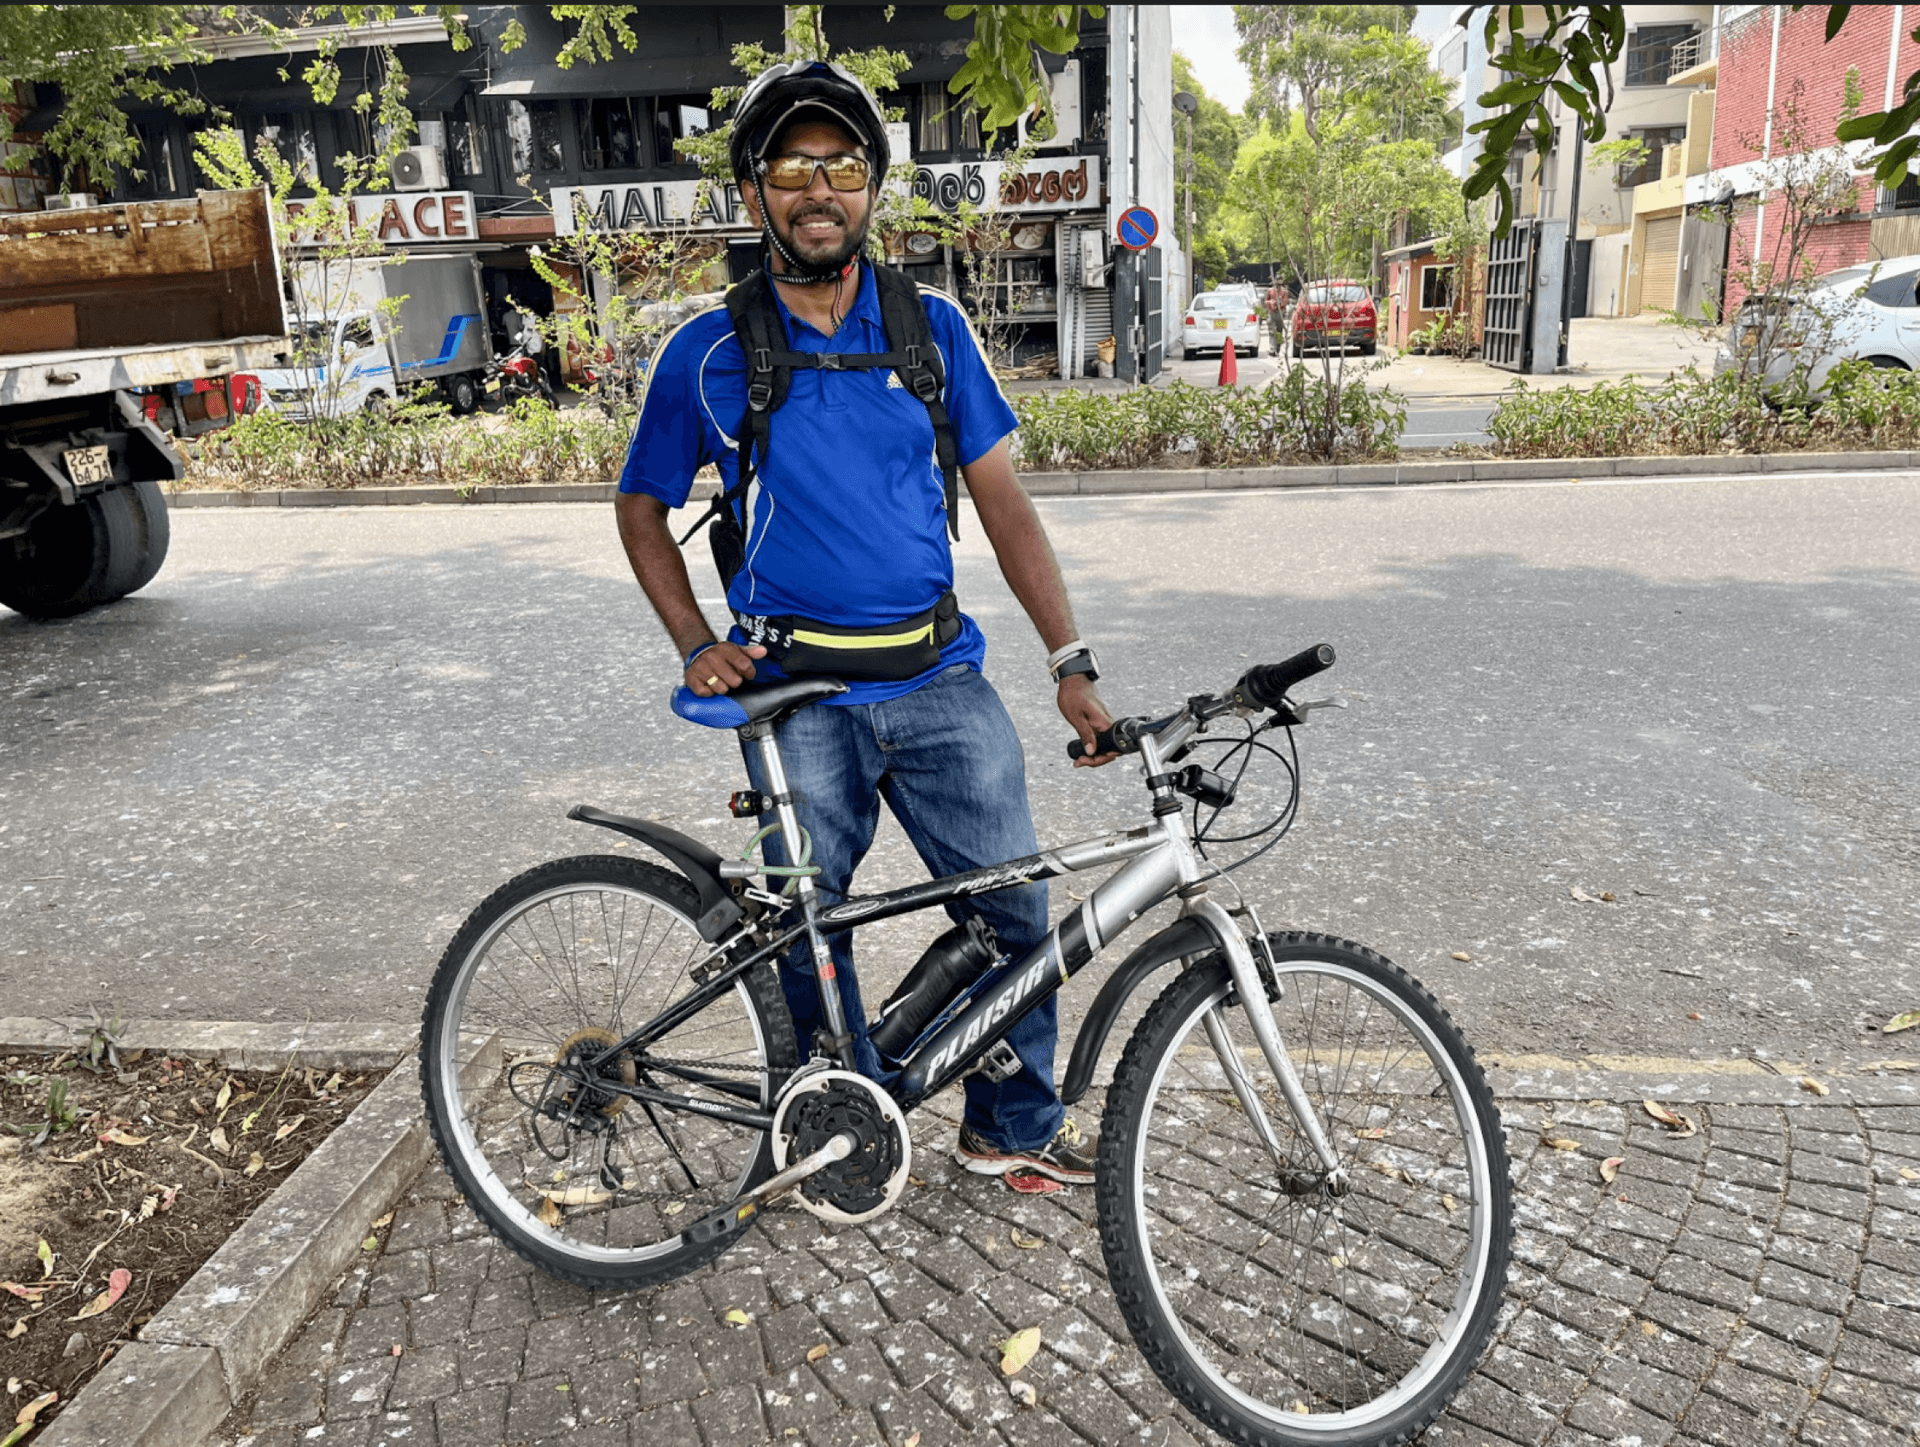 Chathuranga Rajapaksha began using his bike to make deliveries in Colombo when Sri Lanka’s fuel crisis started.